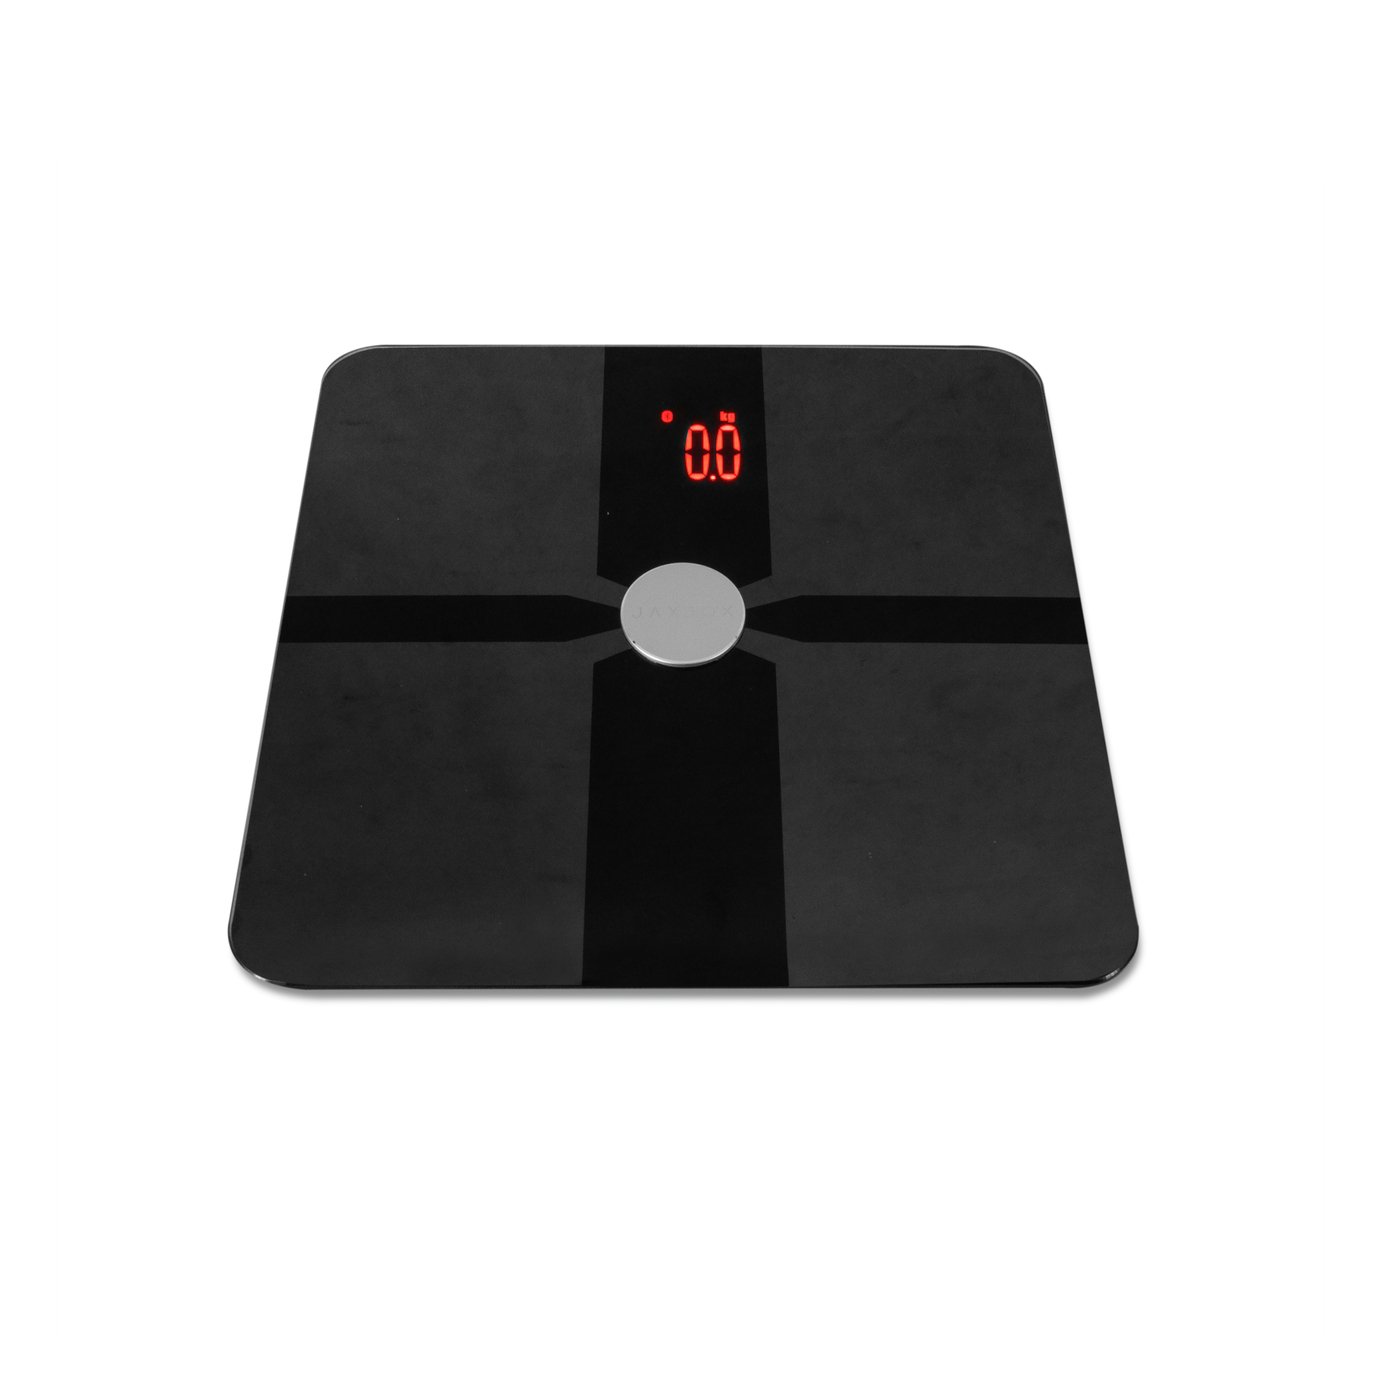 JAXJOX Bluetooth Smart Scale - Black